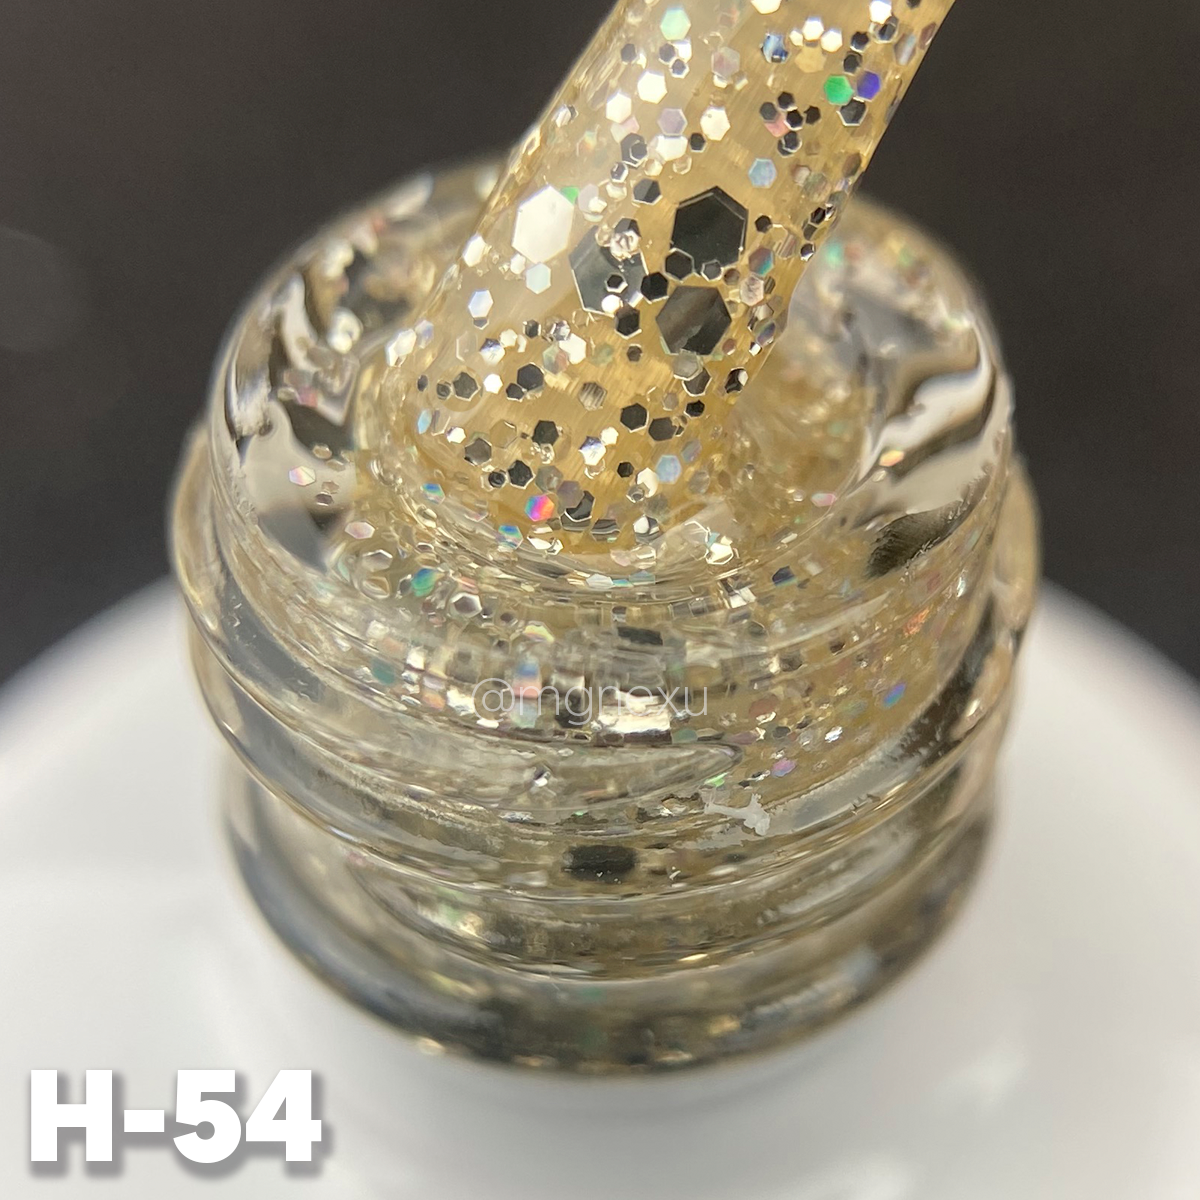 H-54